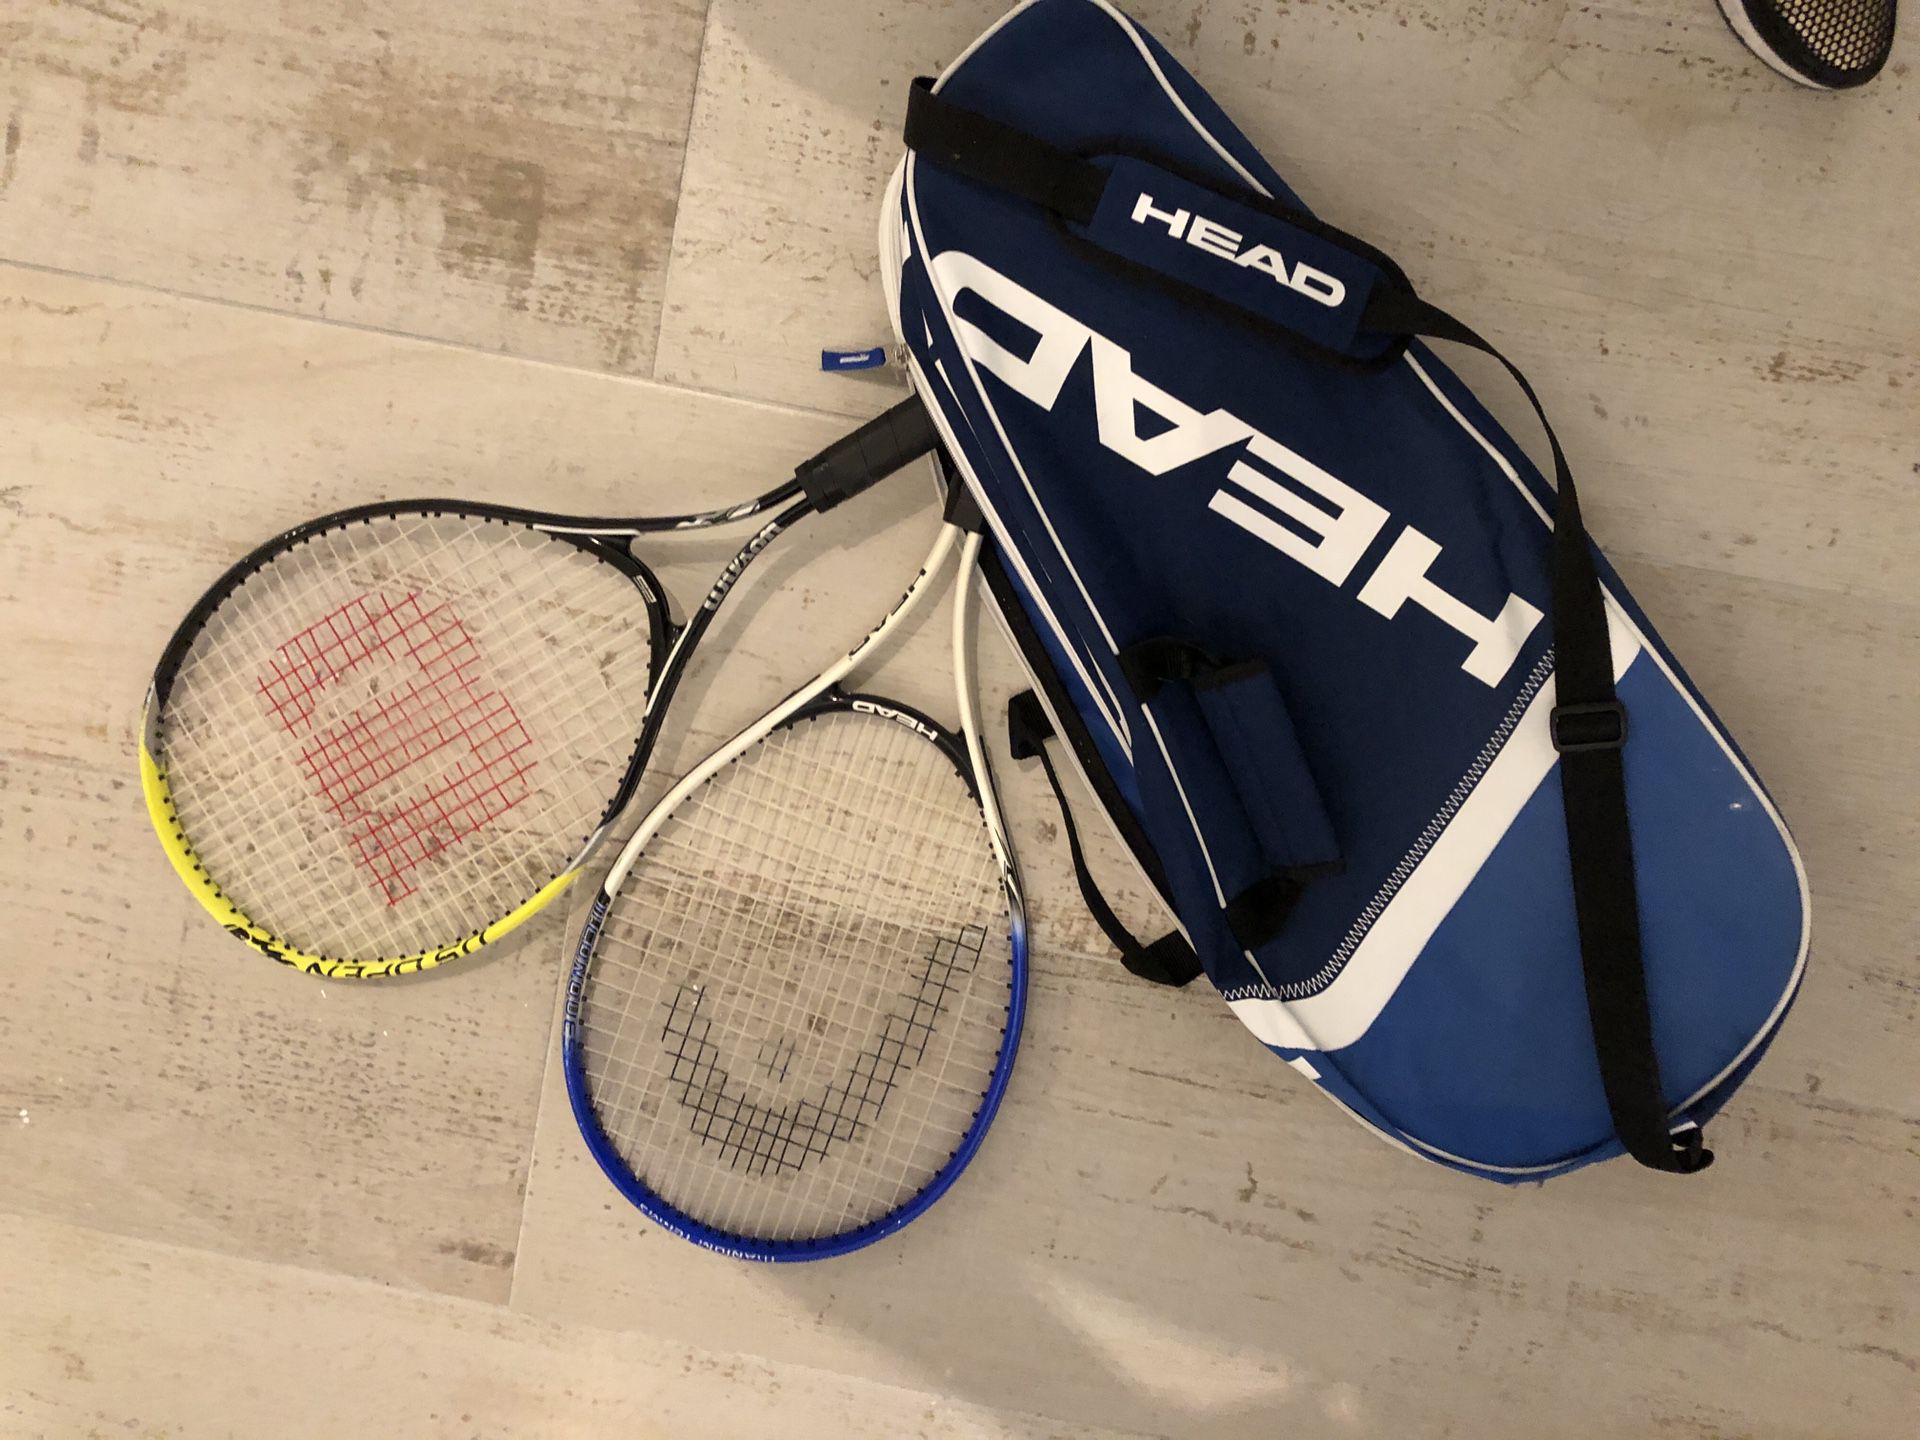 Tennis set Wilson and head rackets